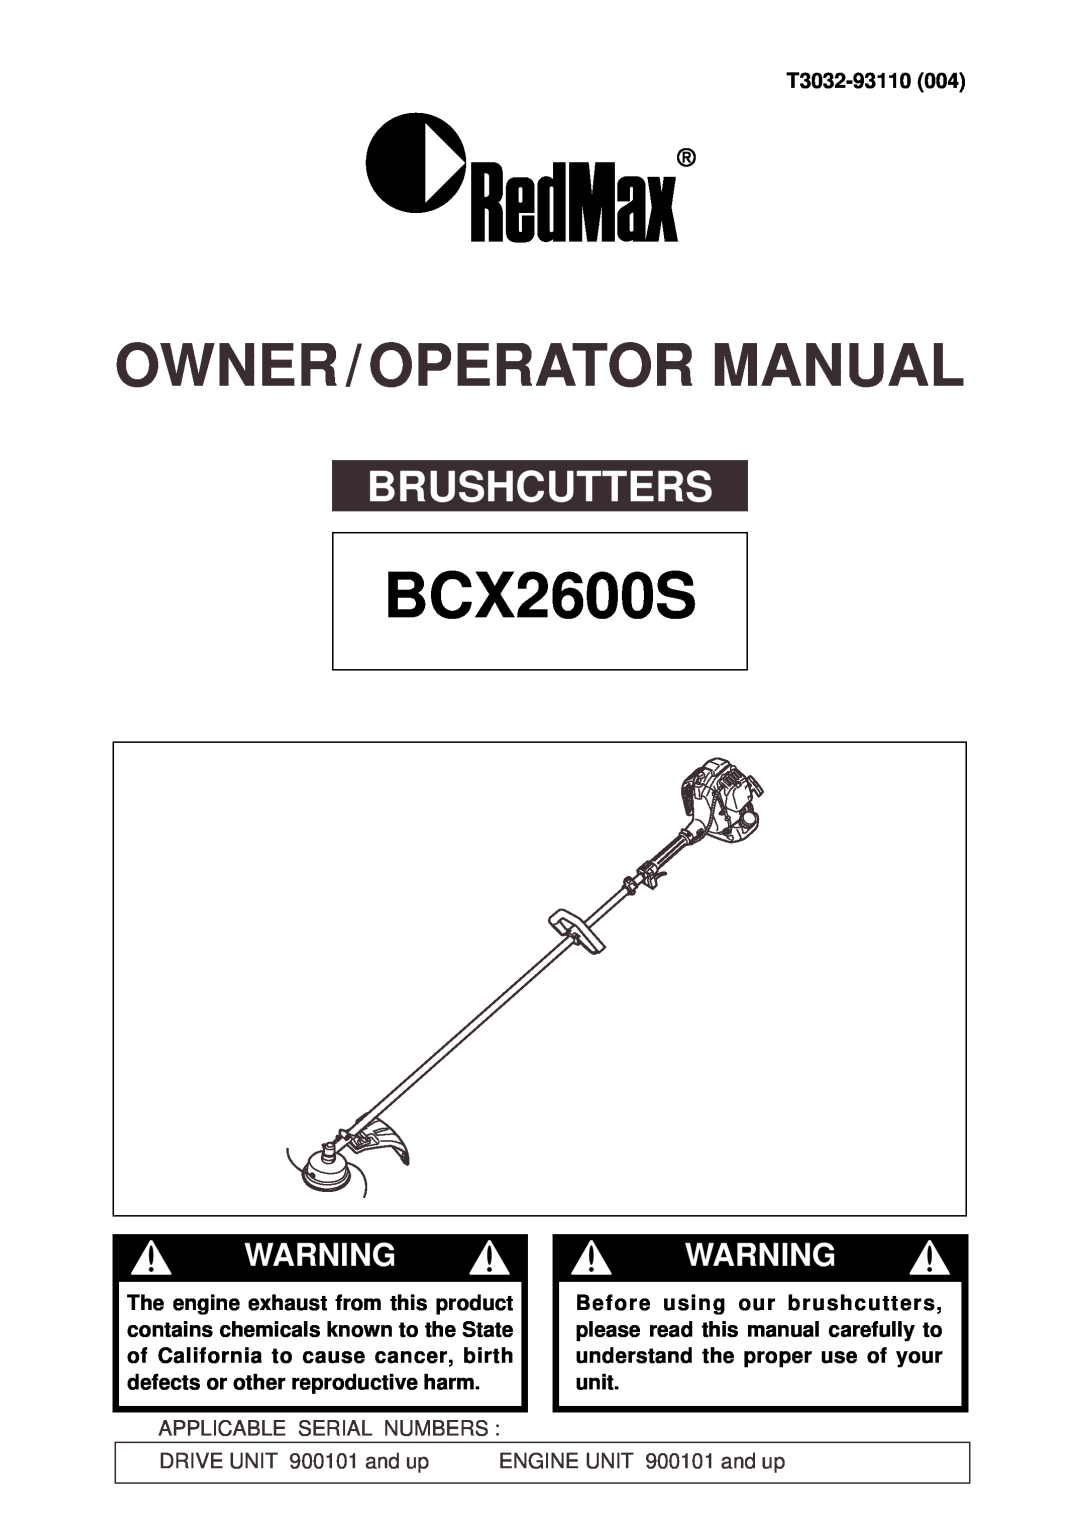 Zenoah BCX2600S manual Brushcutters, T3032-93110004, Owner / Operator Manual, Warningwarning 